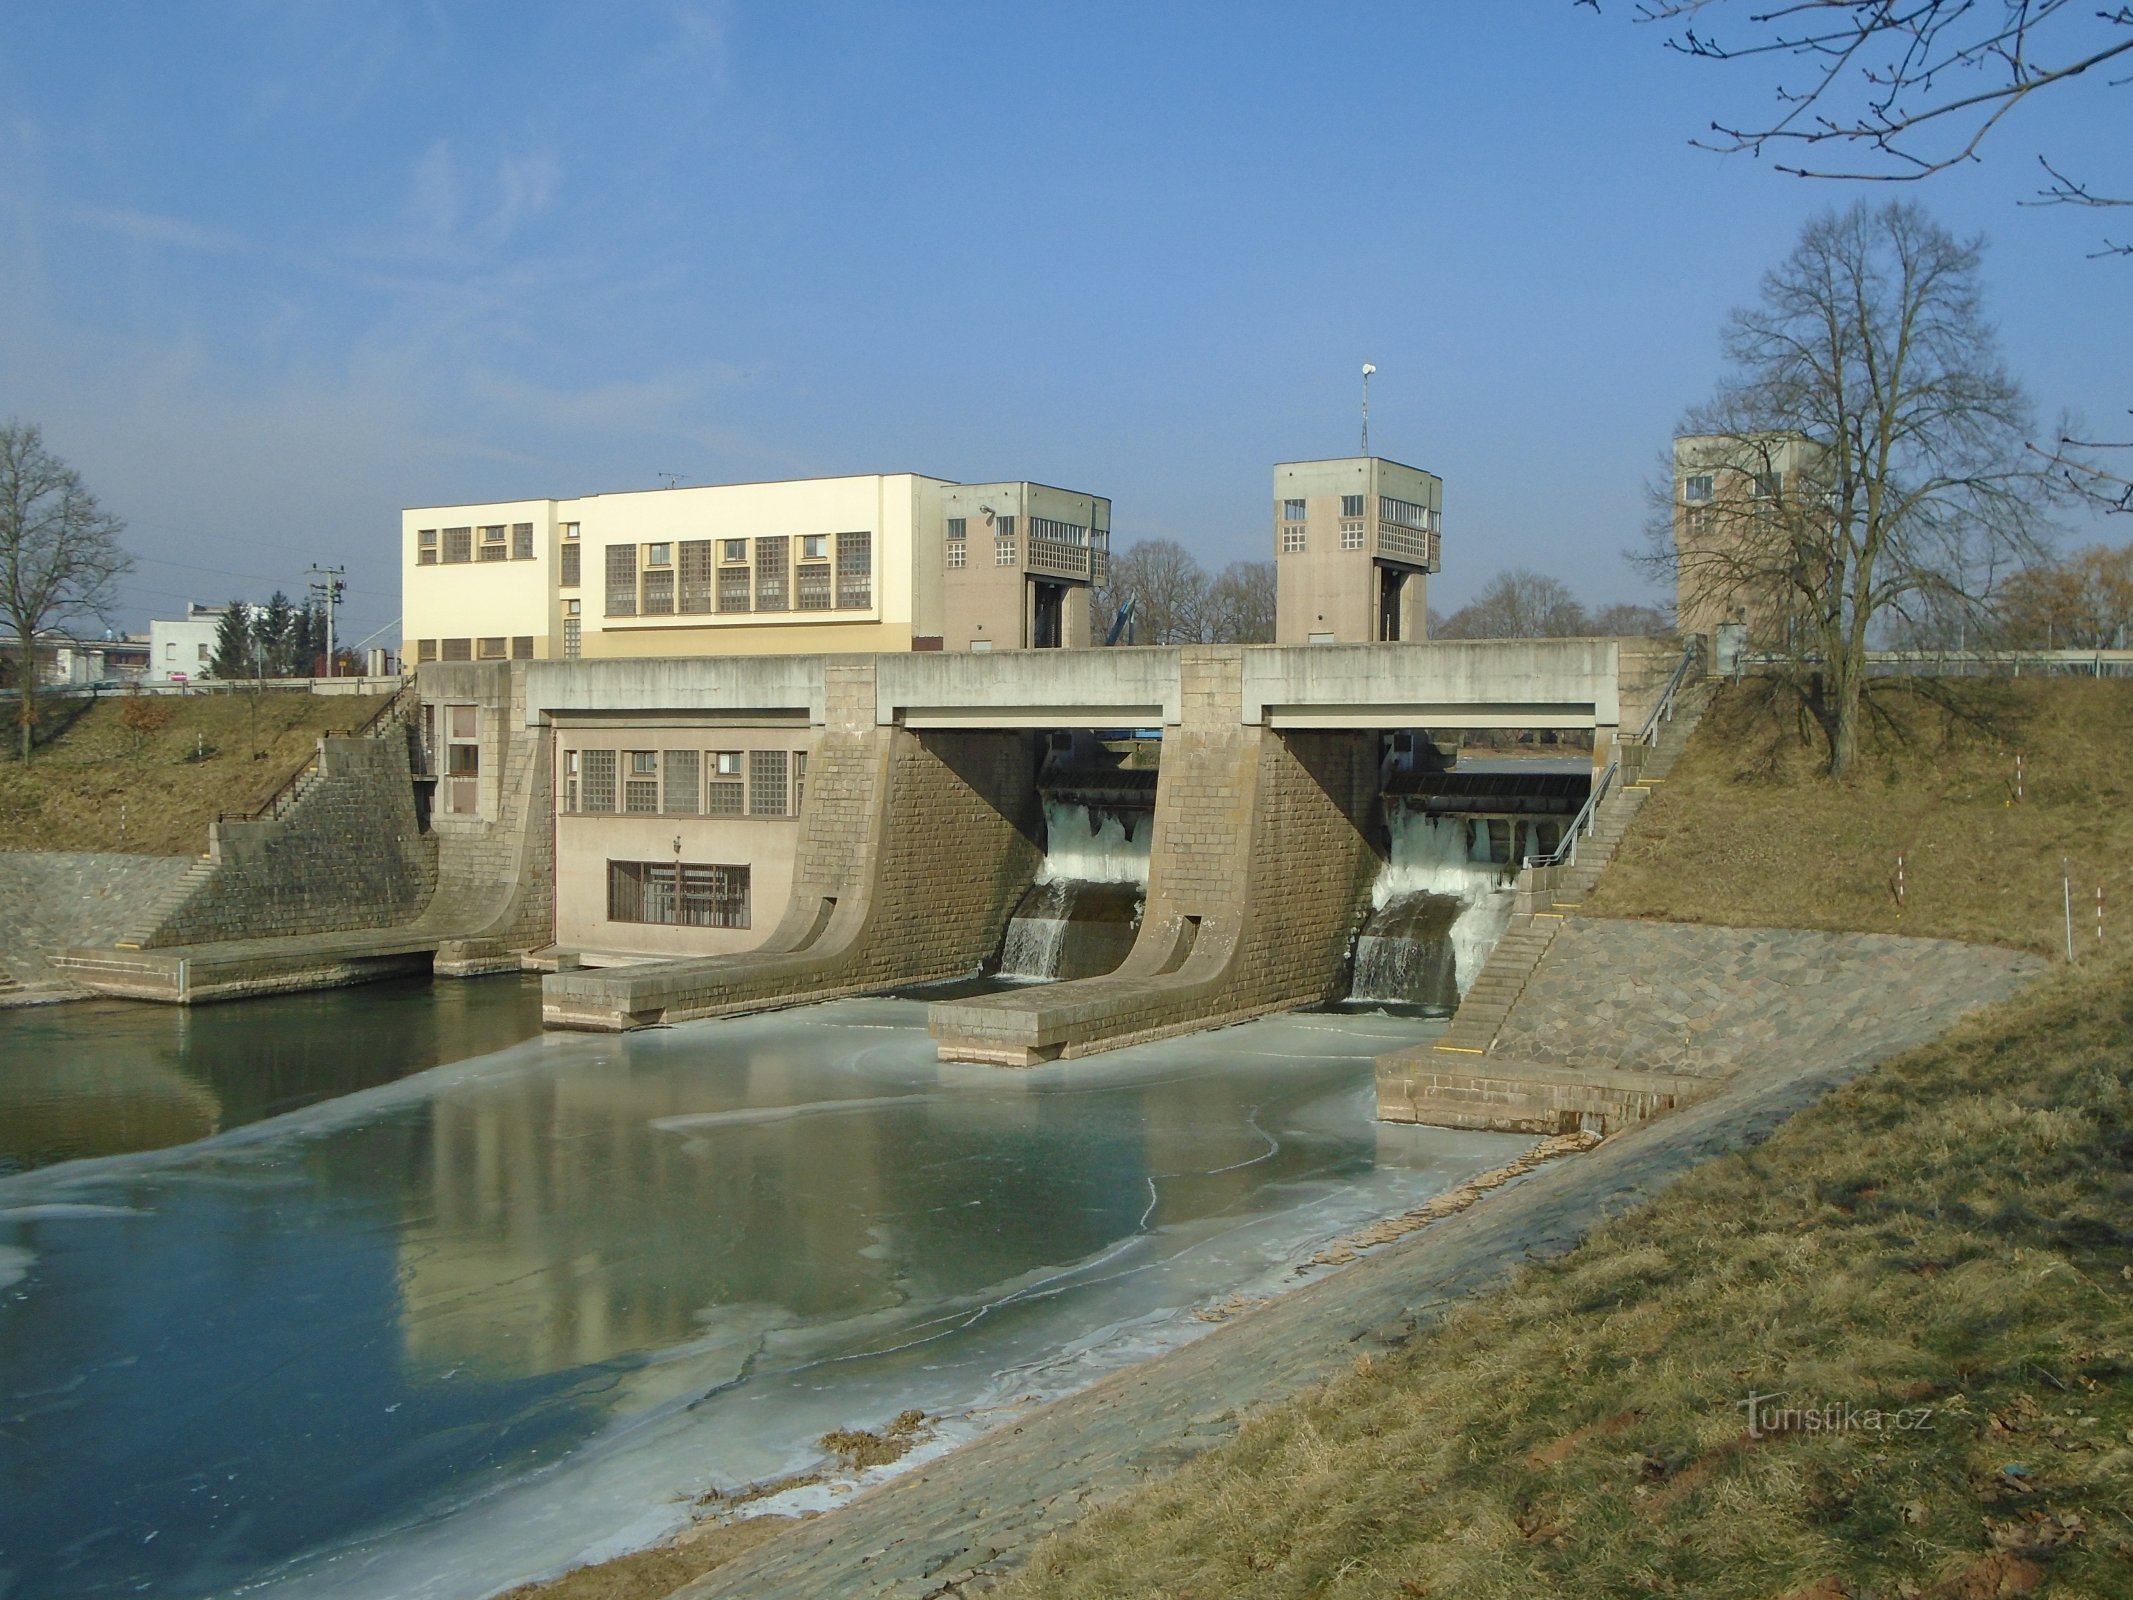 Mała elektrownia wodna (Předměřice nad Labem)